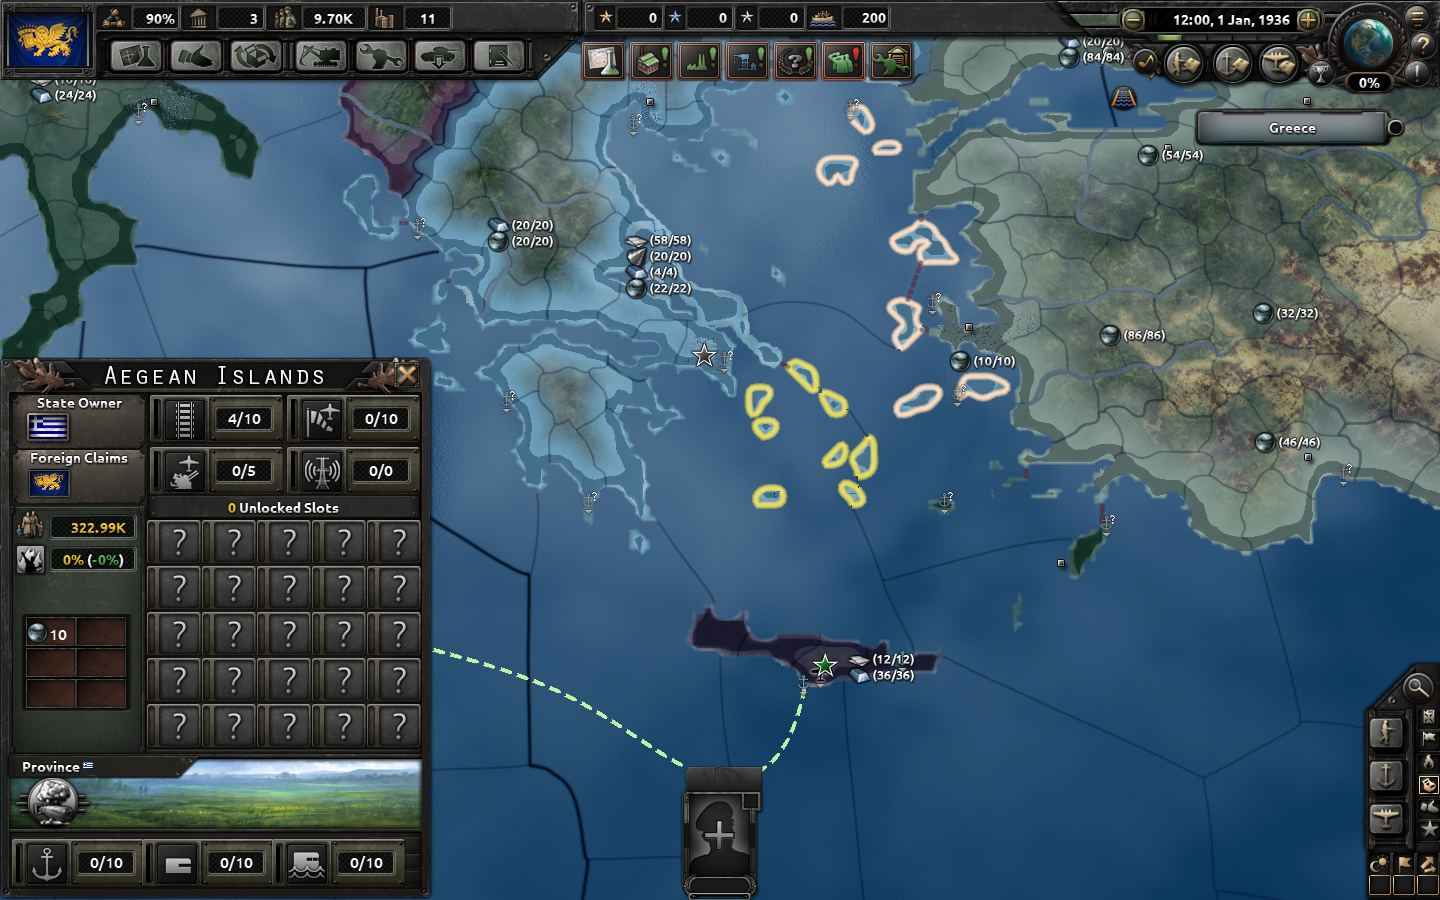 Aegean now set as core.